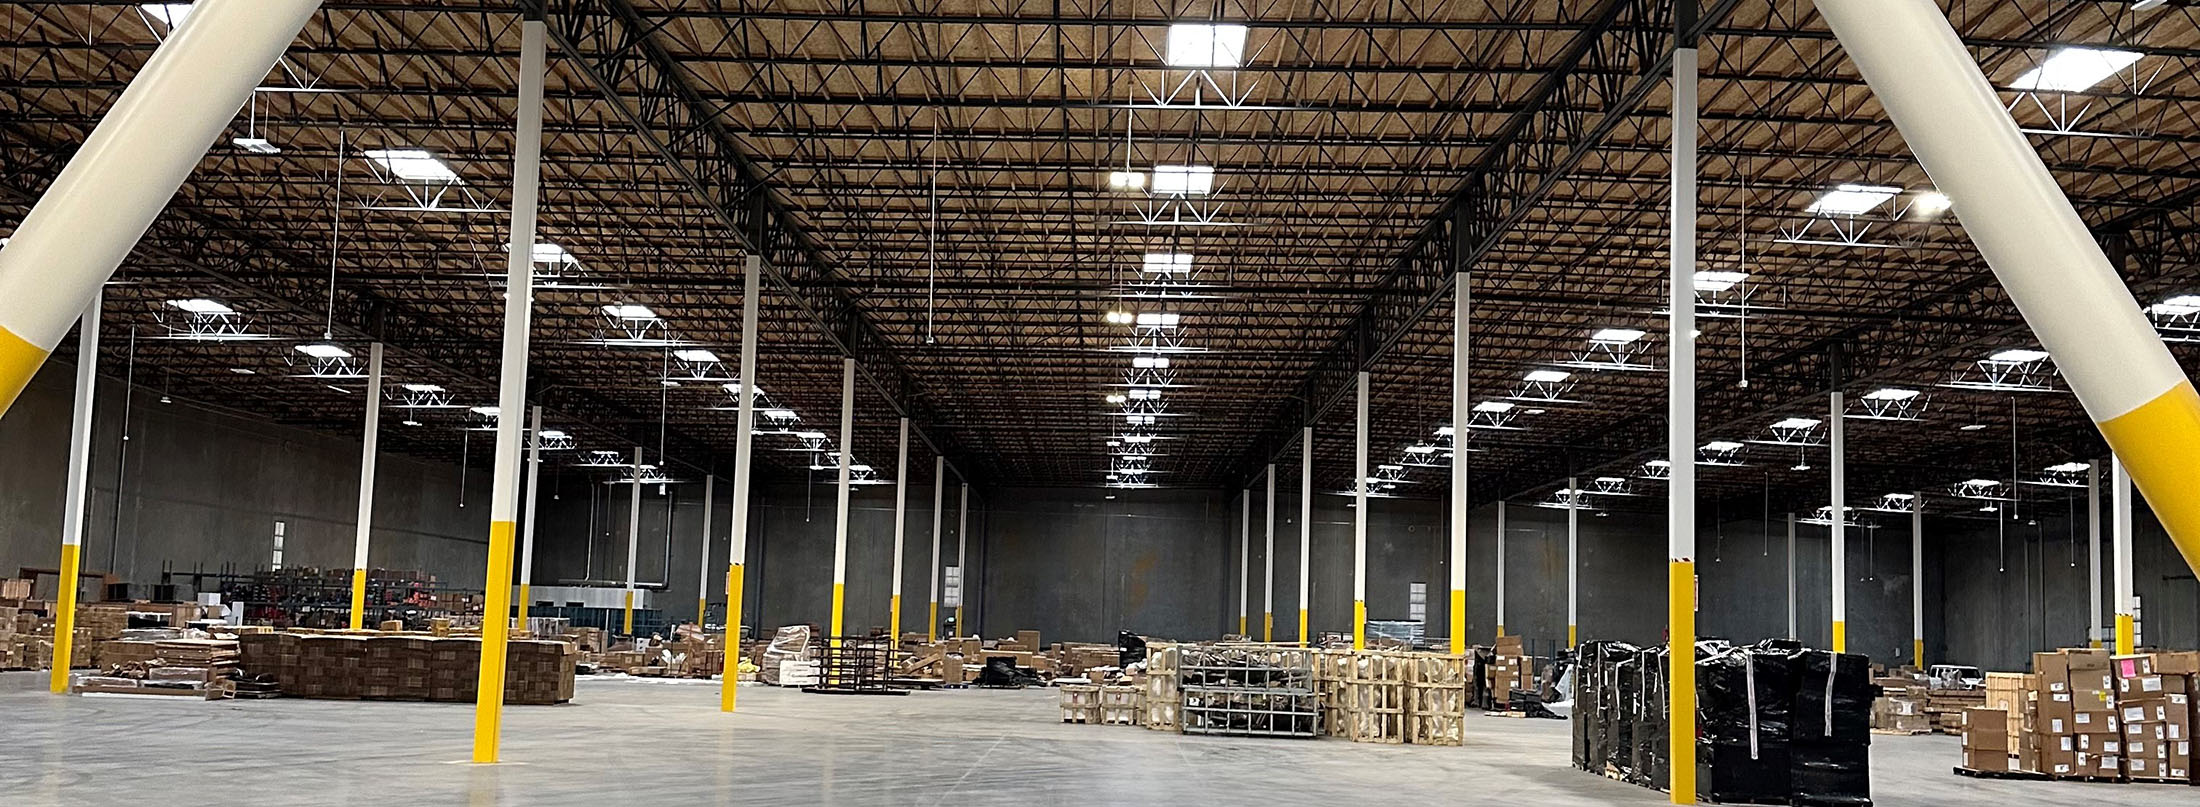 fire sprinkler retrofit commercial (warehouse) building San Jose